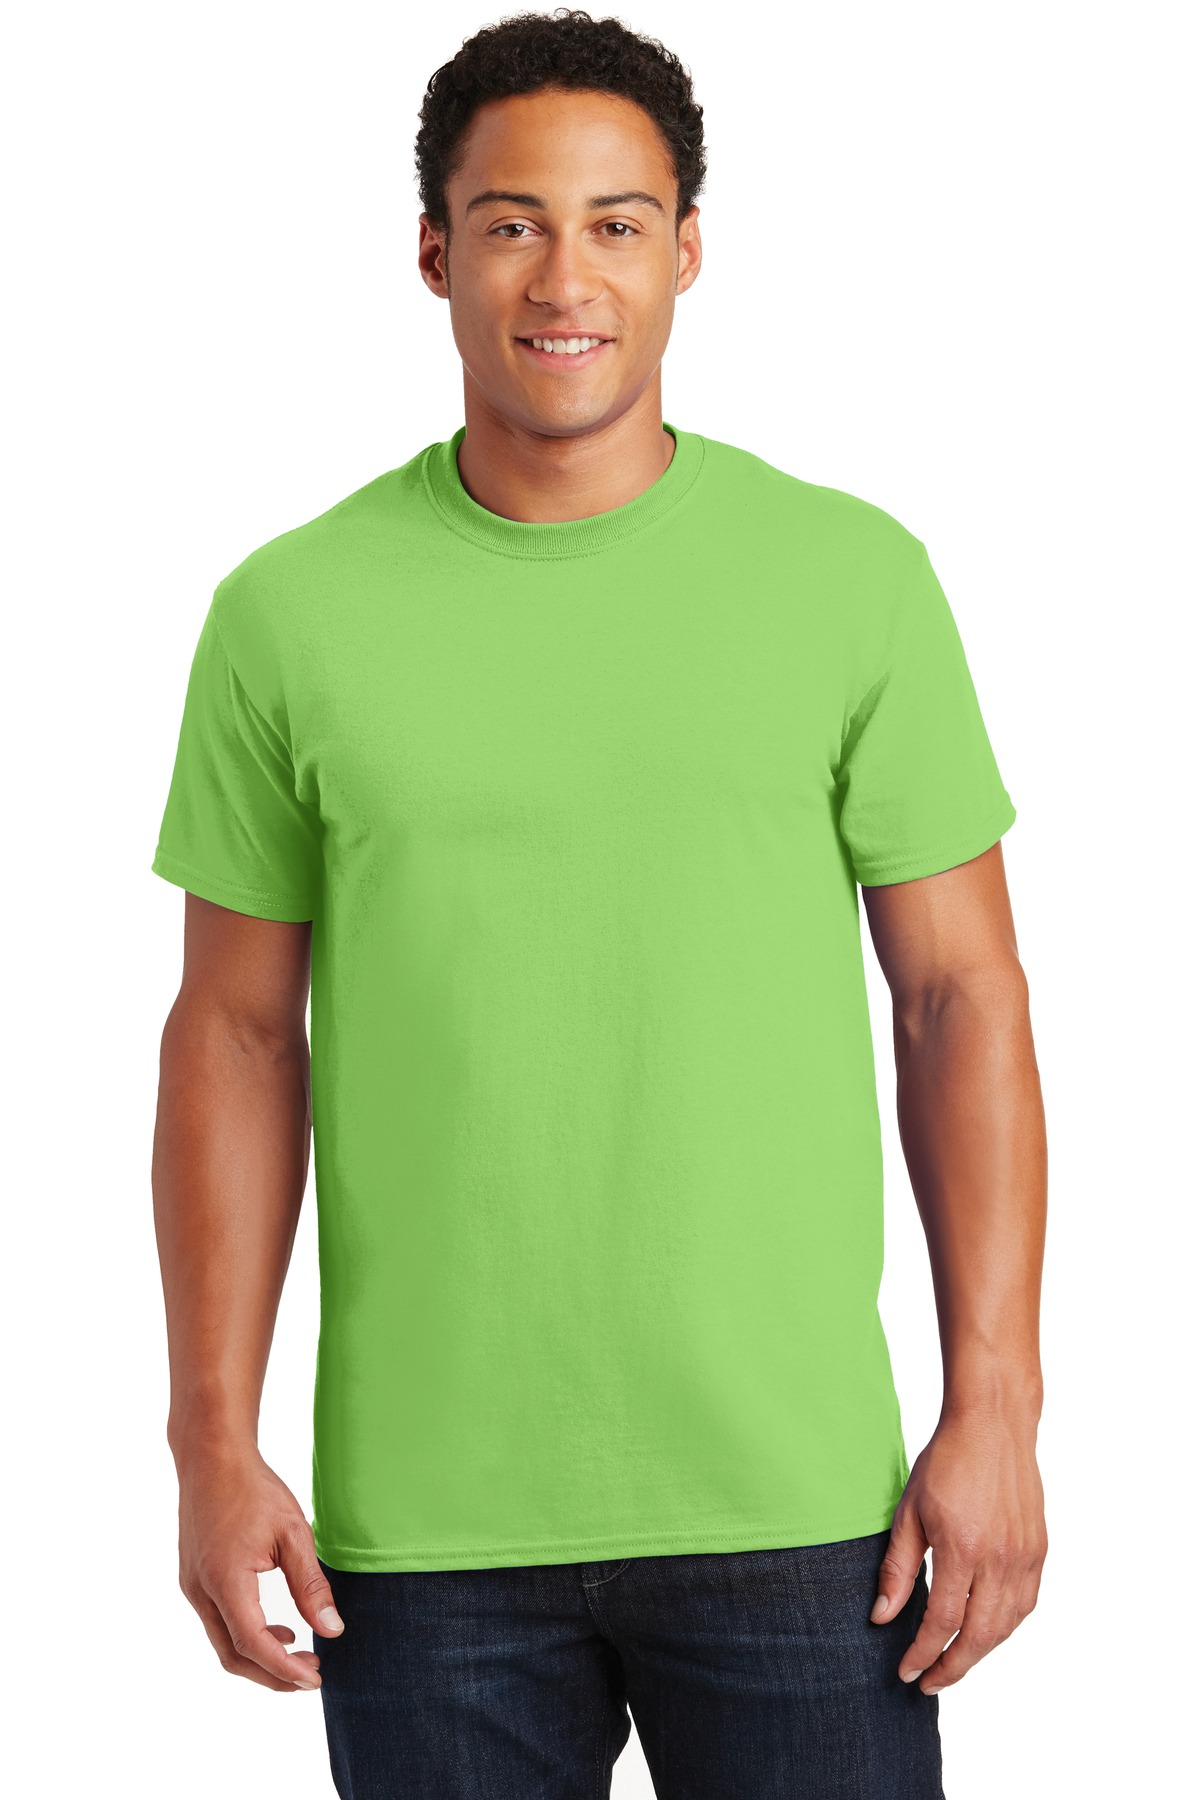 Gildan Mens Ultra Cotton Short Sleeve T-Shirt (M) (Tan)